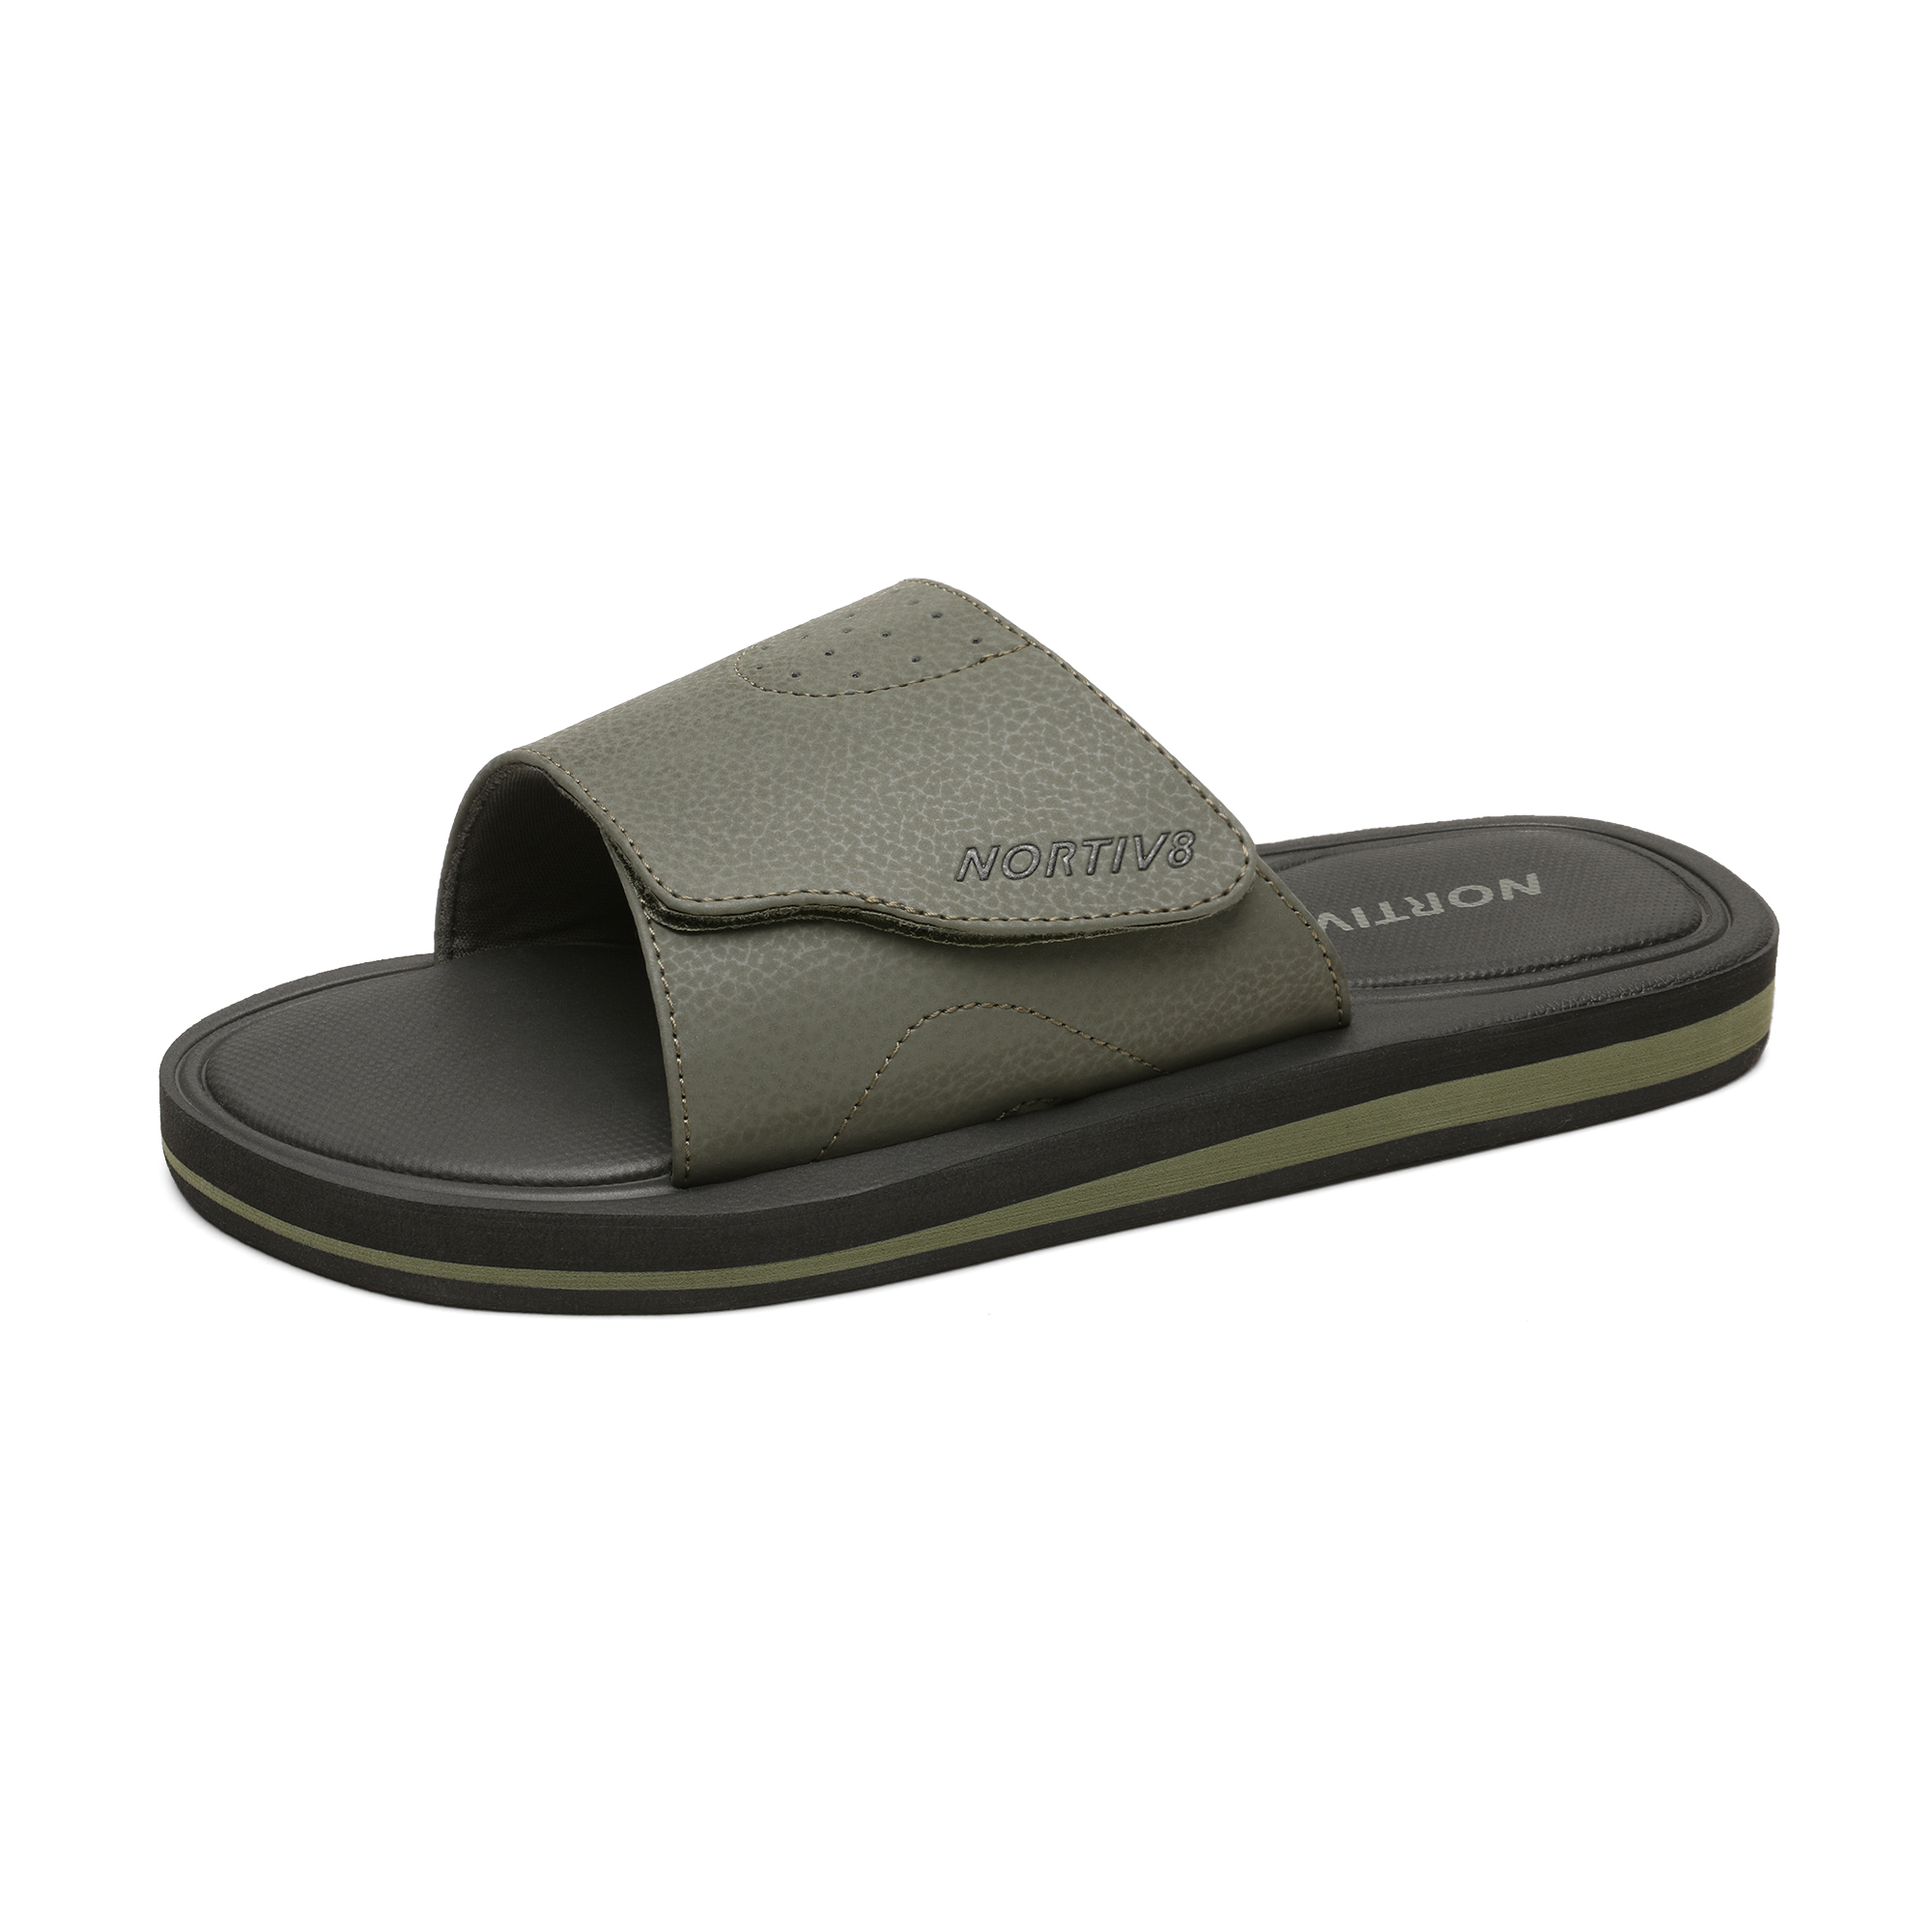 Nortiv8 Men's Memory Foam Adjustable Slide Sandals Comfort Lightweight Summer Beach Sandals Shoes FUSION OLIVE/GREEN Size 13 - image 1 of 5